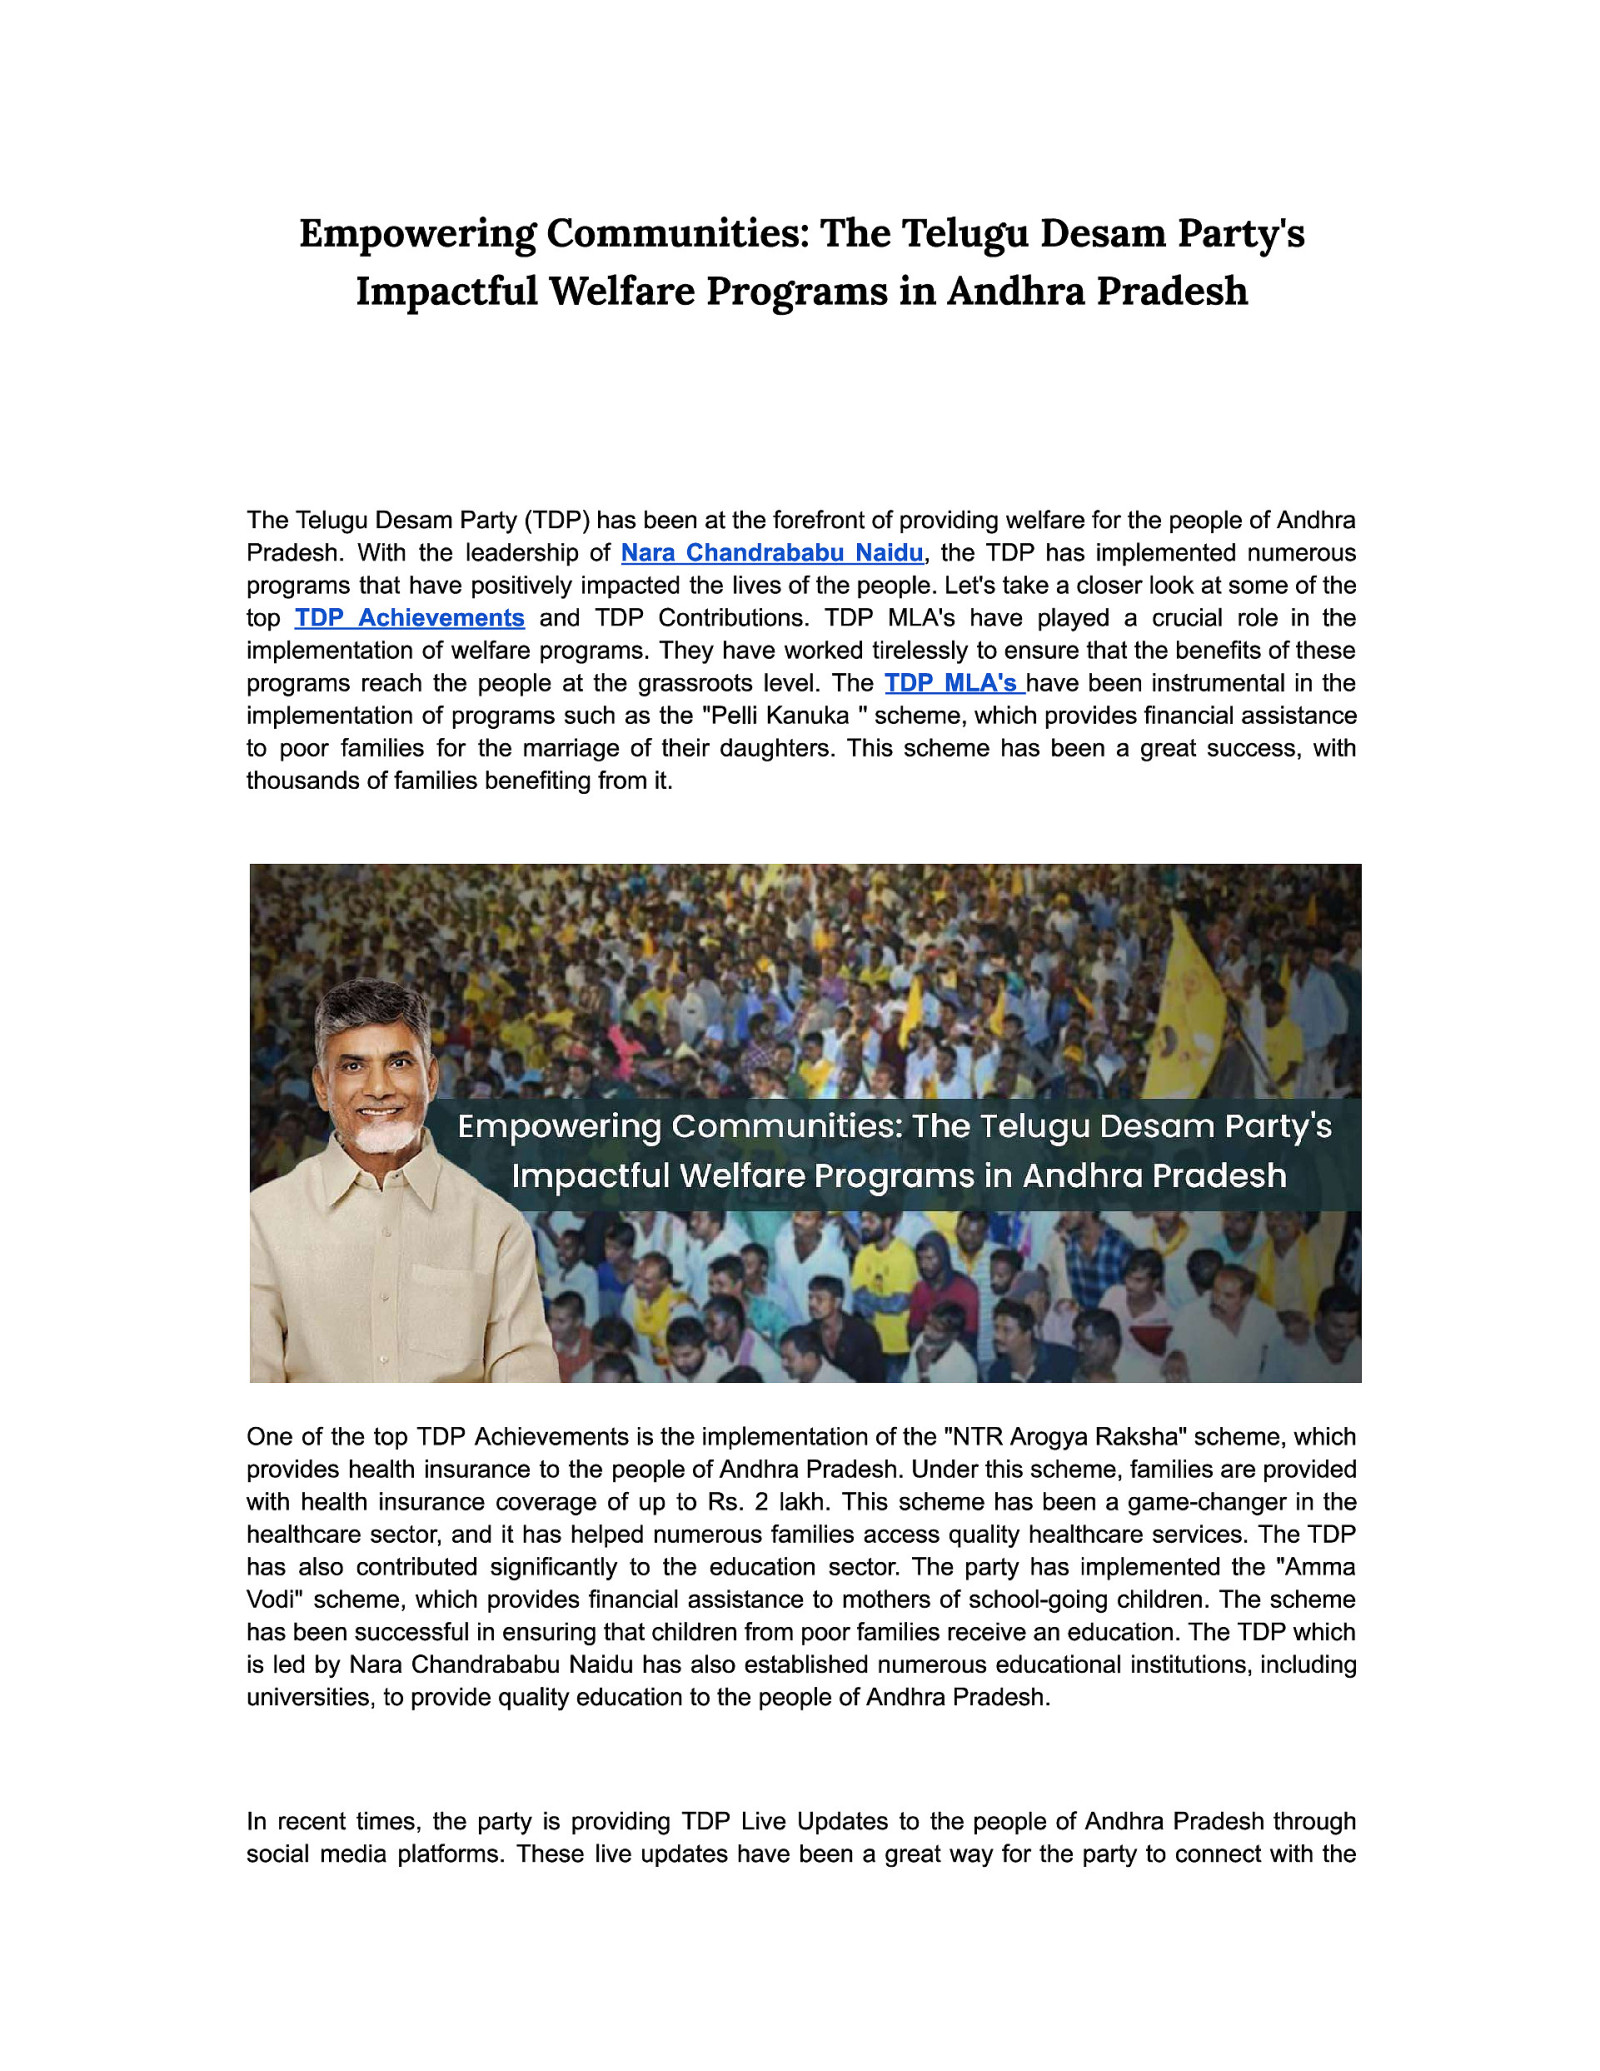 Empowering Communities: The Telugu Desam Party’s Impactful Welfare Programs in Andhra Pradesh